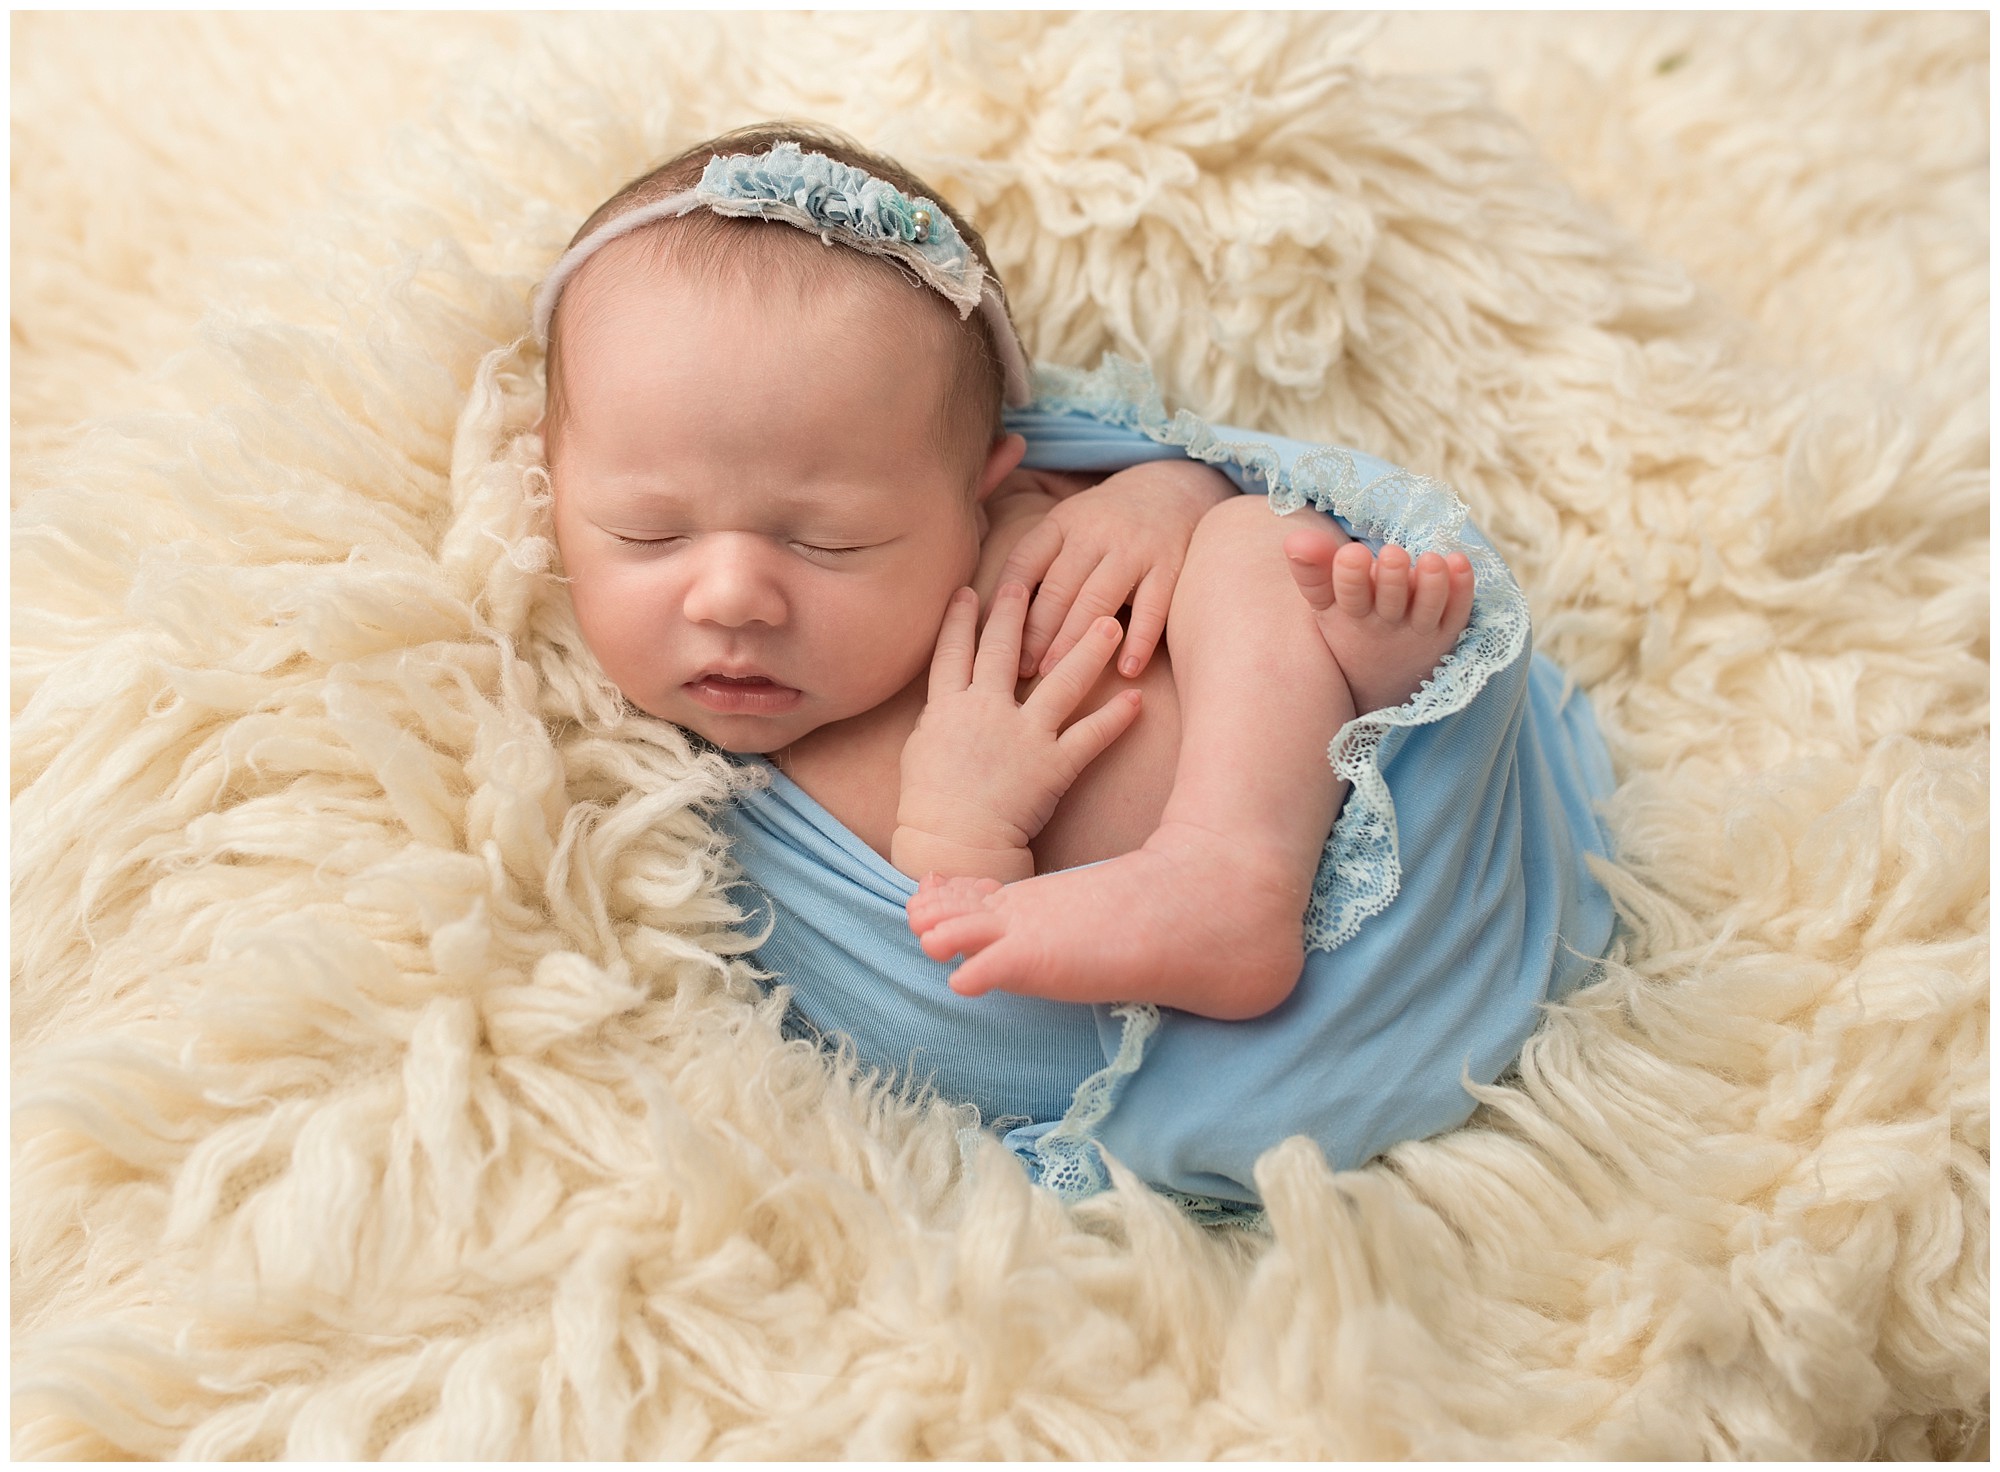 sleeping newborn baby girl wrapped in blue fabric